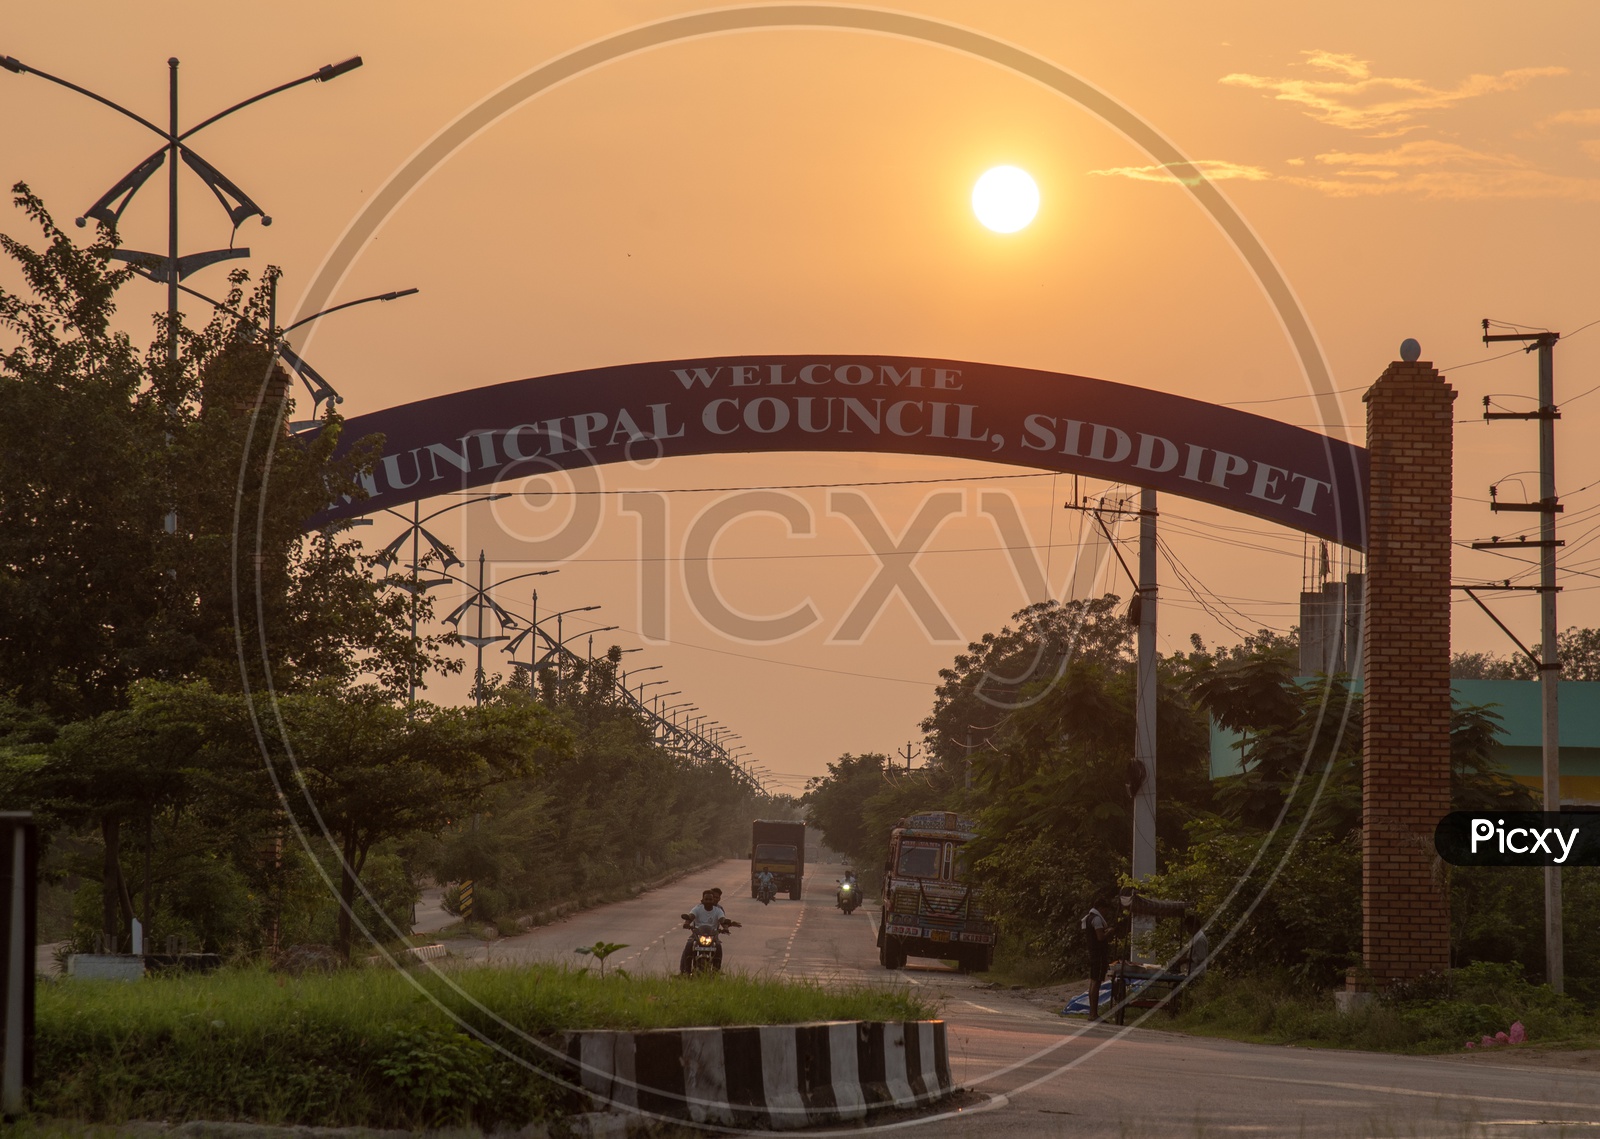 Siddipet town entrance, Muncipal Council.